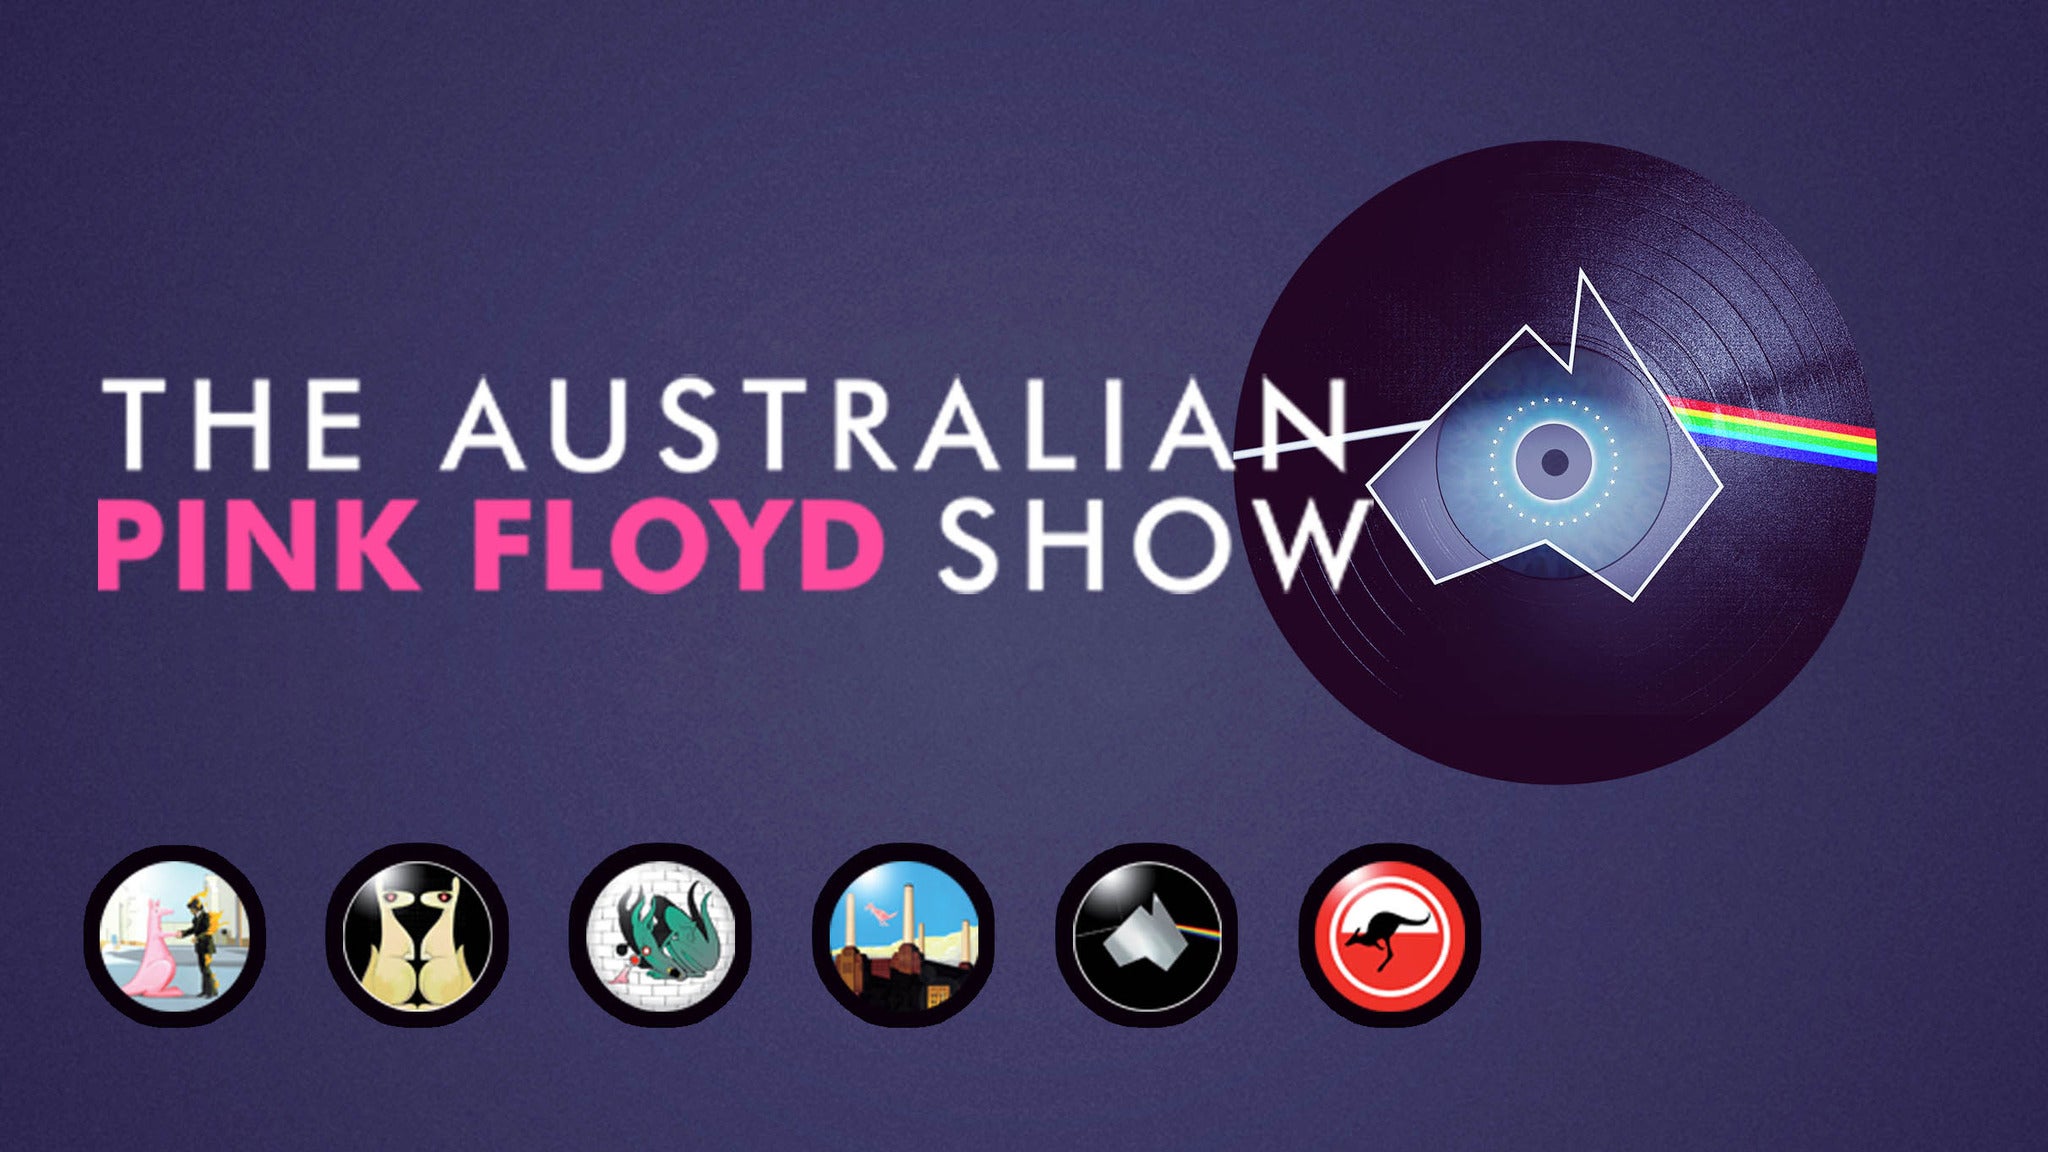 The Australian Pink Floyd Show at Hard Rock Live Orlando